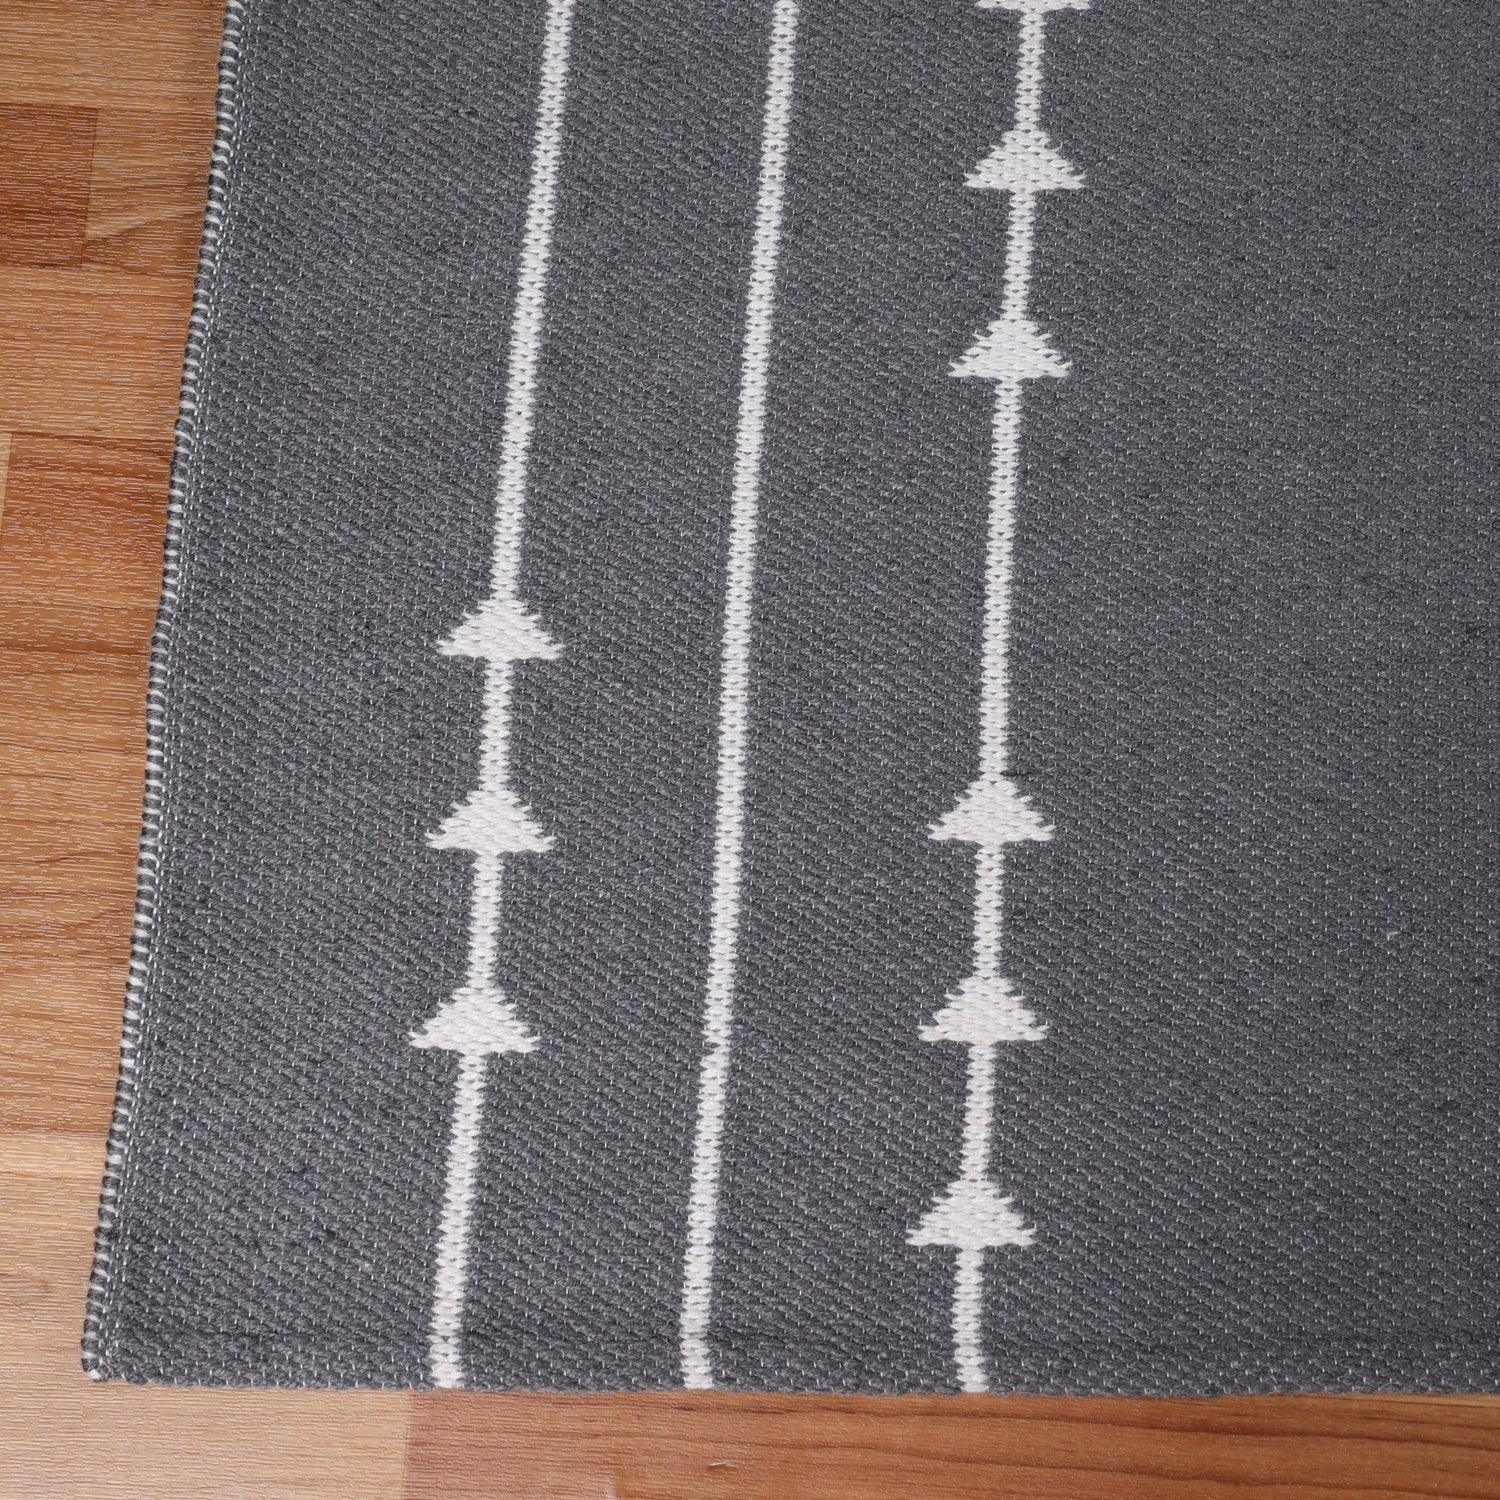  Superior Bohemian Arrow Line Pattern Indoor Outdoor Area Rug - Grey